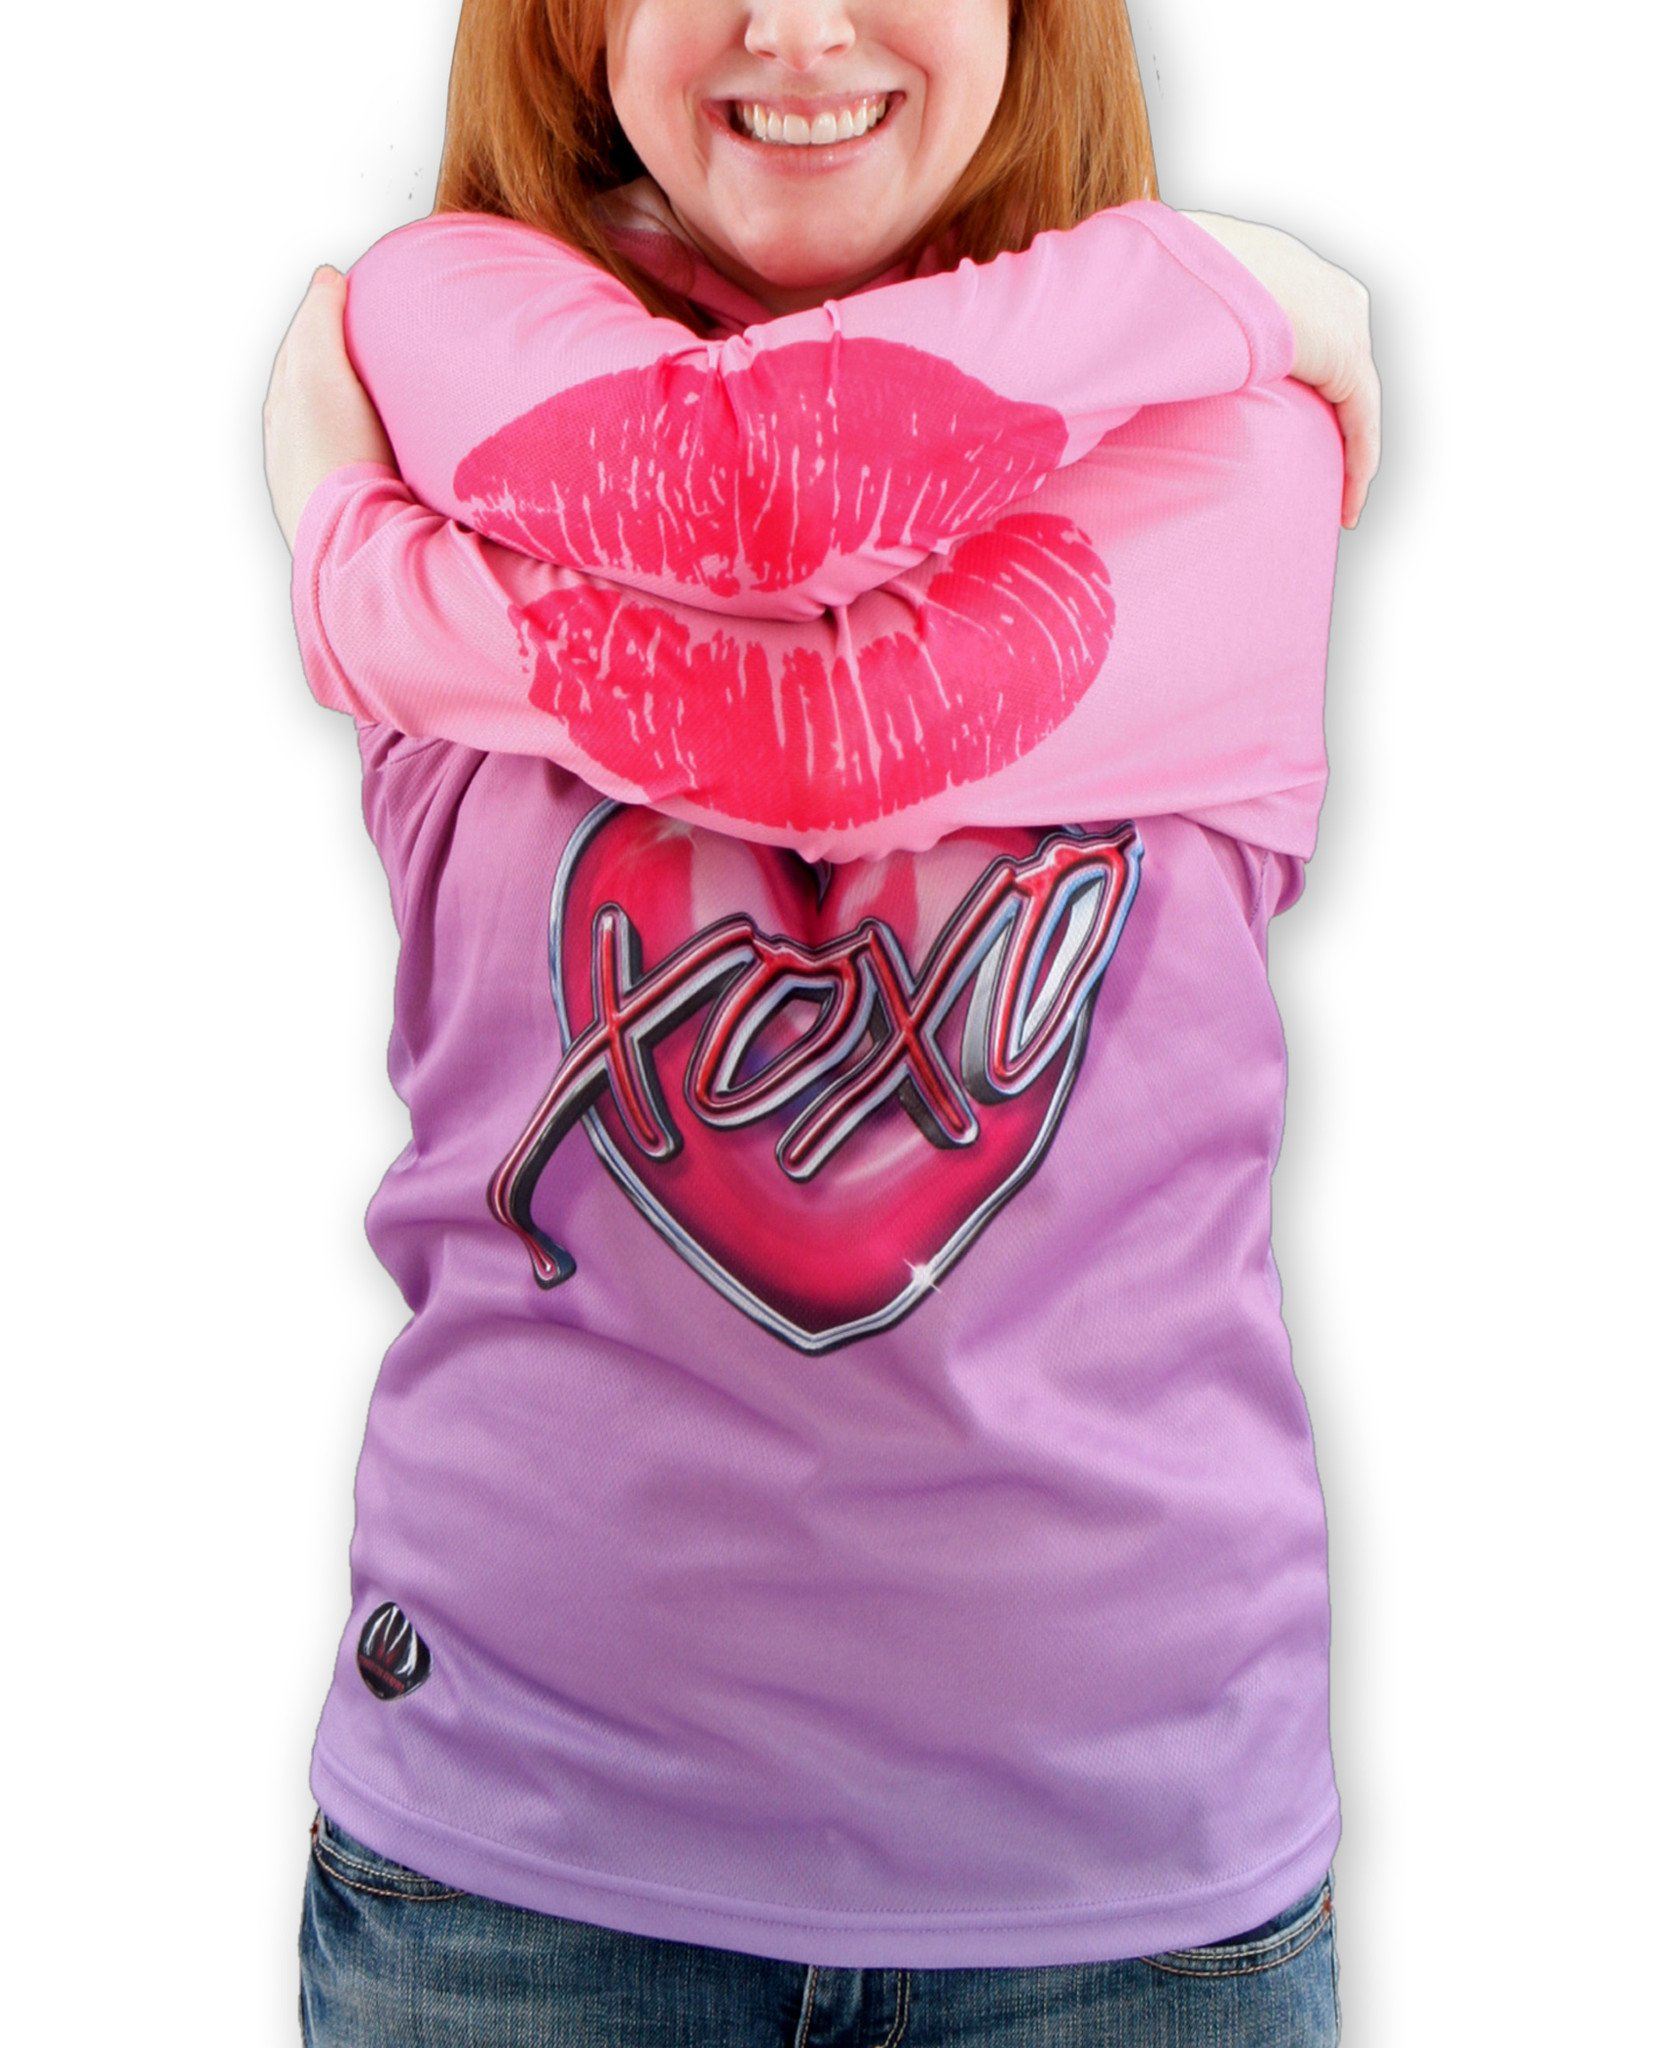 XOXO KISSY LIPS Hoodie Chomp Shirt by MOUTHMAN® Kid's Clothing 